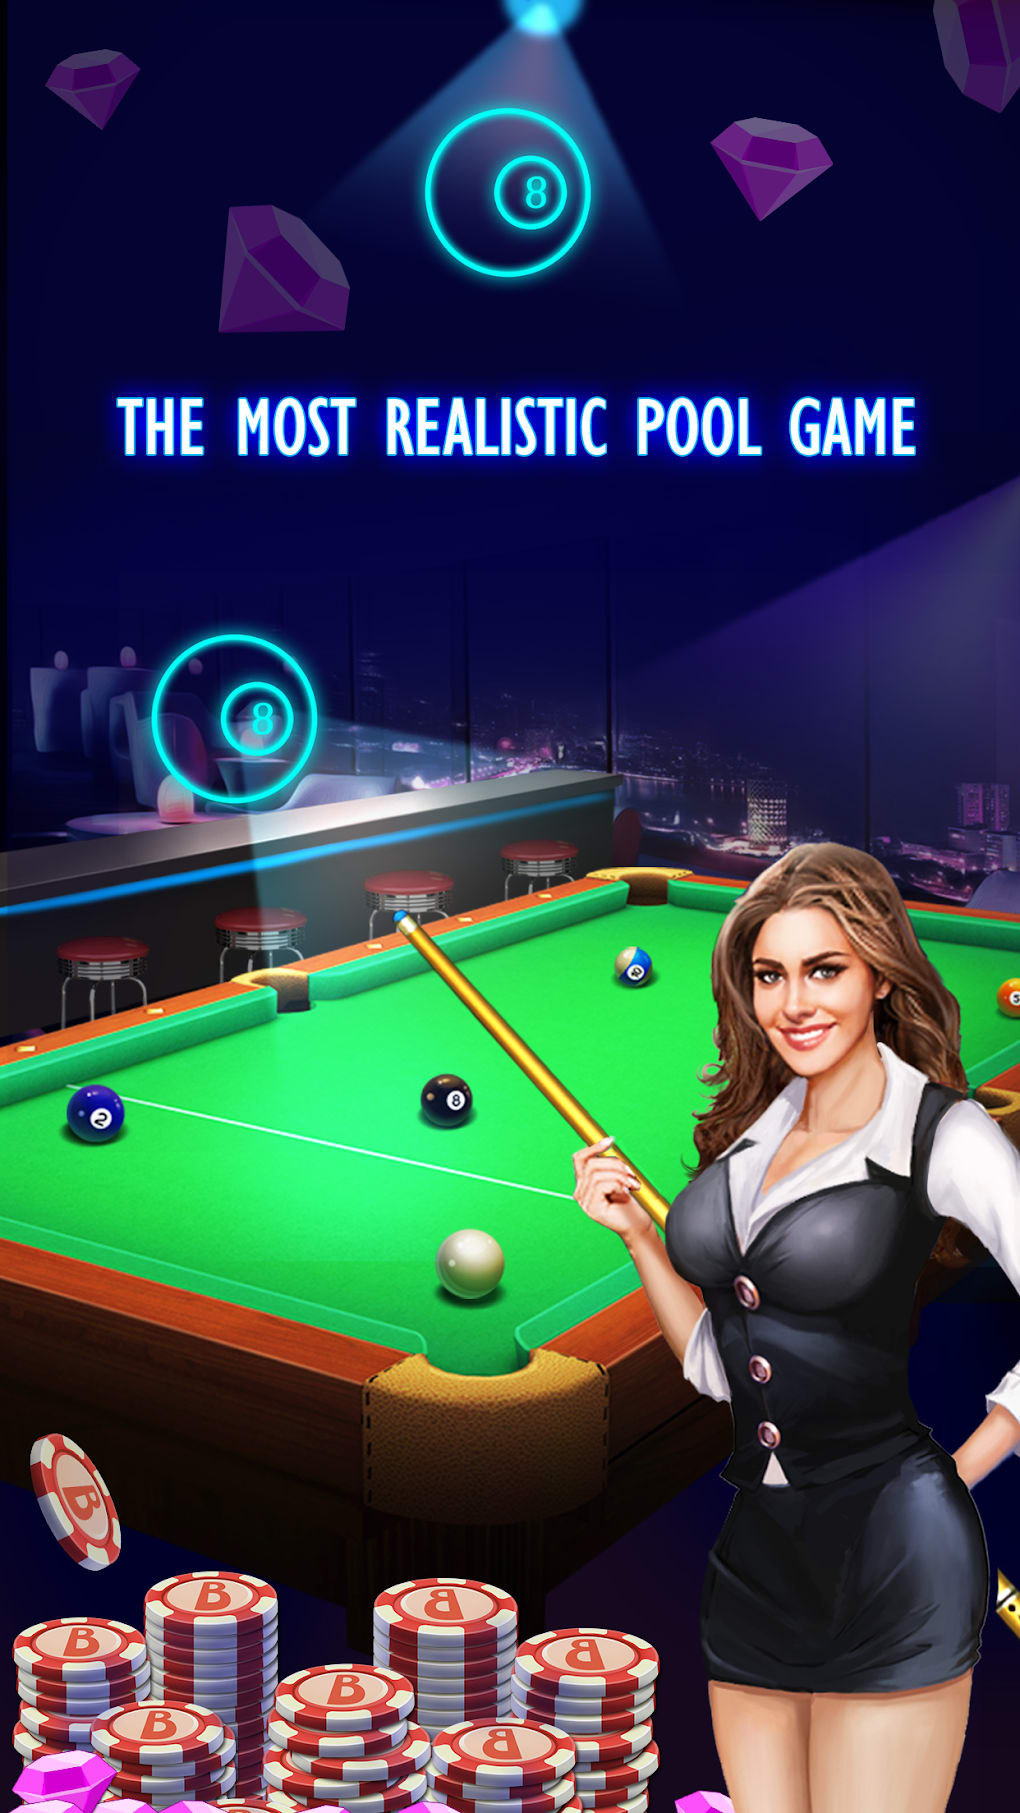 8 Ball Billiards - Free Pool Game - Download